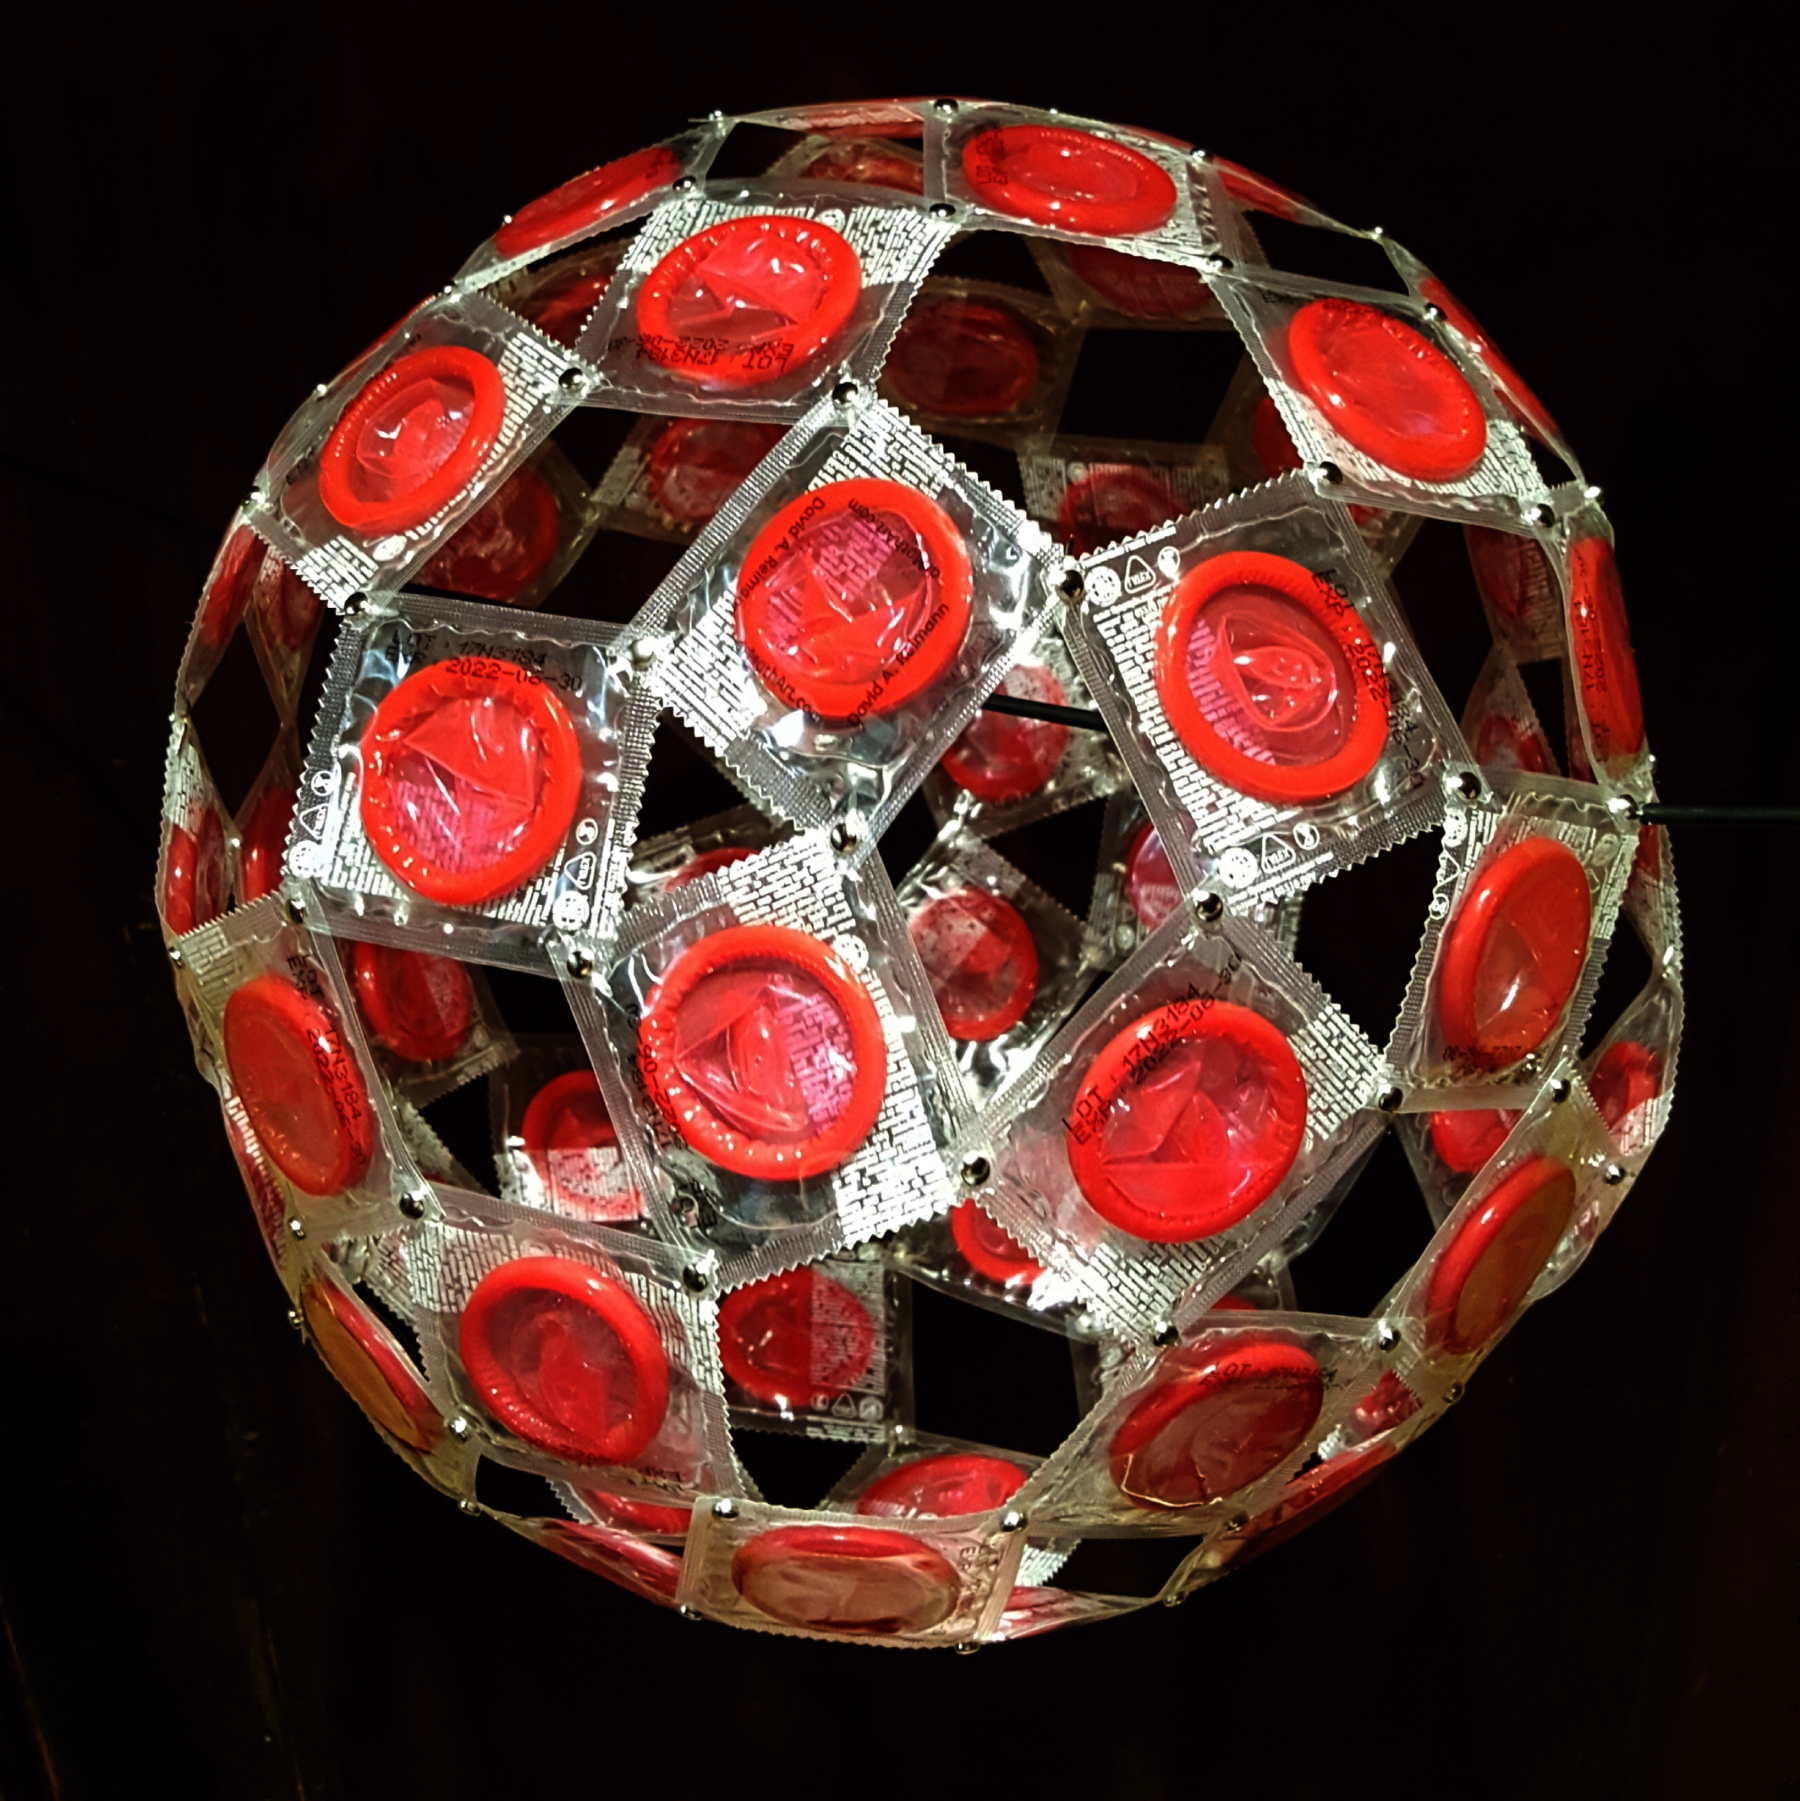 Red Rubber Ball (artwork)